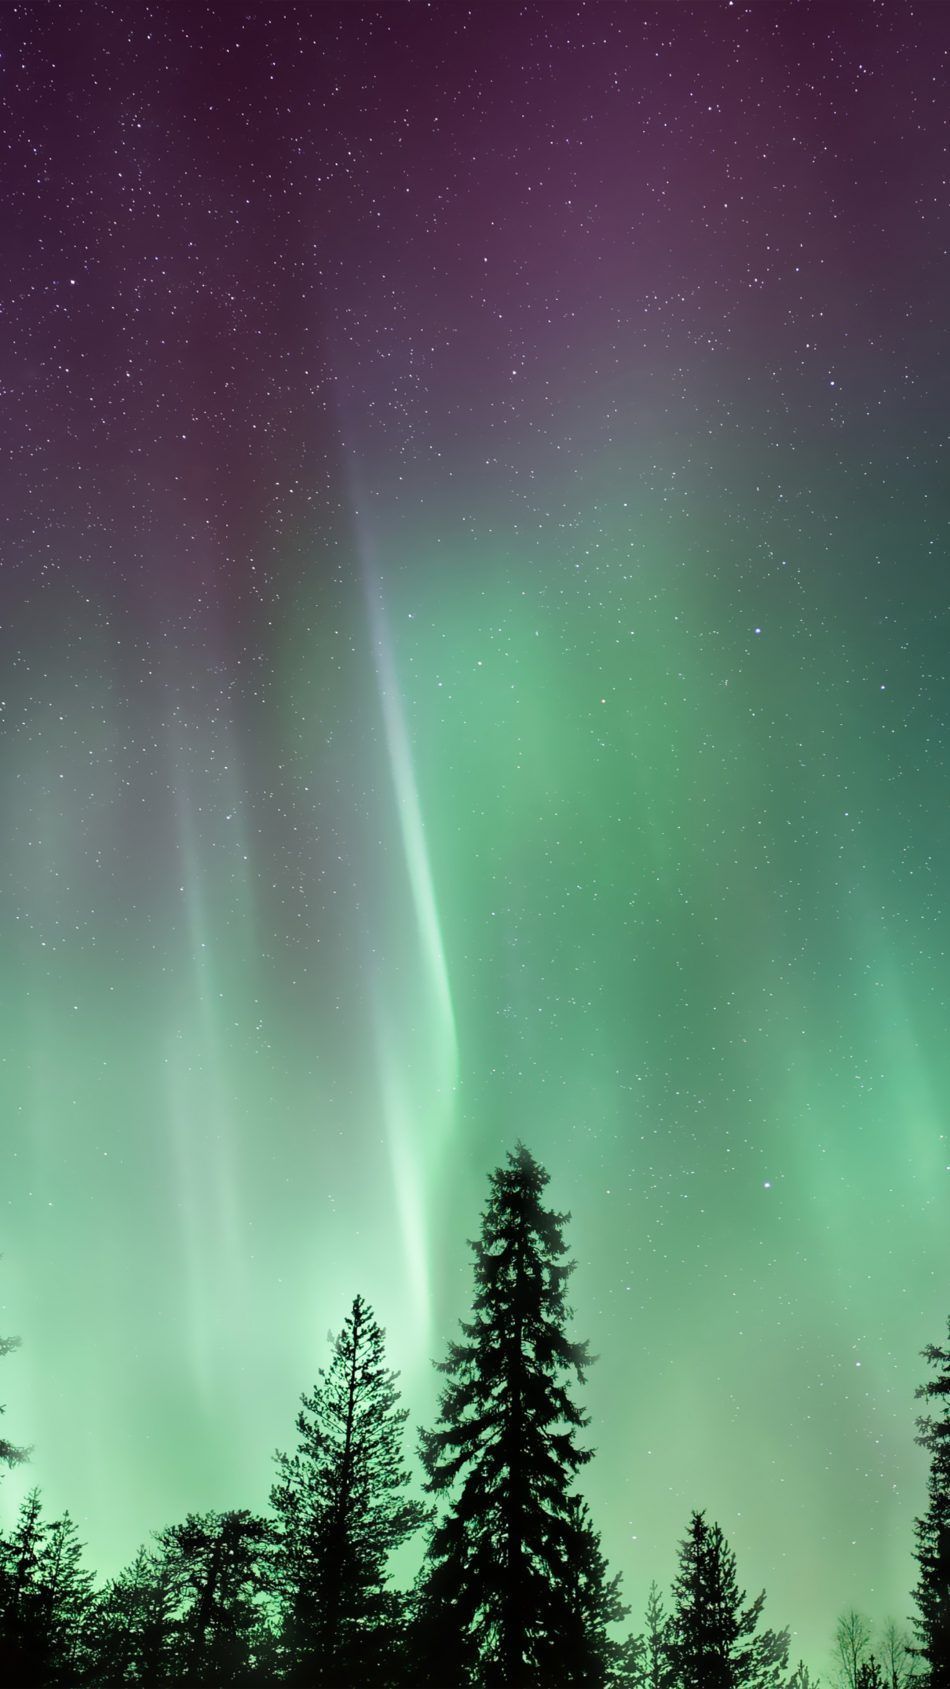 Amazing Northern Lights Aurora Borealis. Northern lights, Aurora